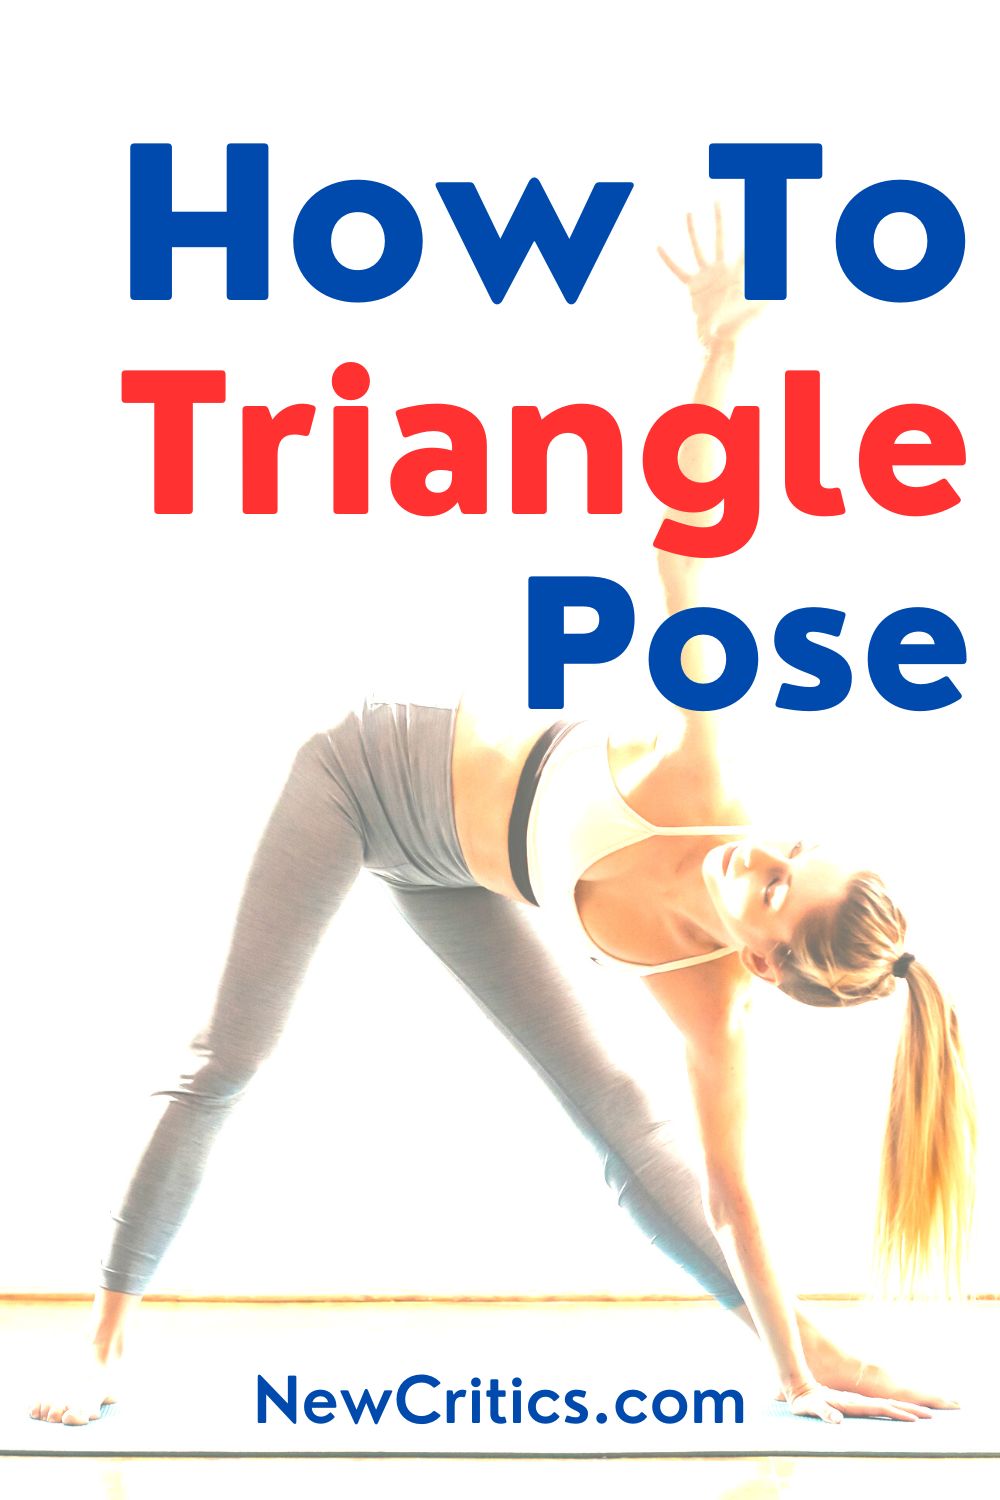 How To Triangle Yoga Pose / Canva